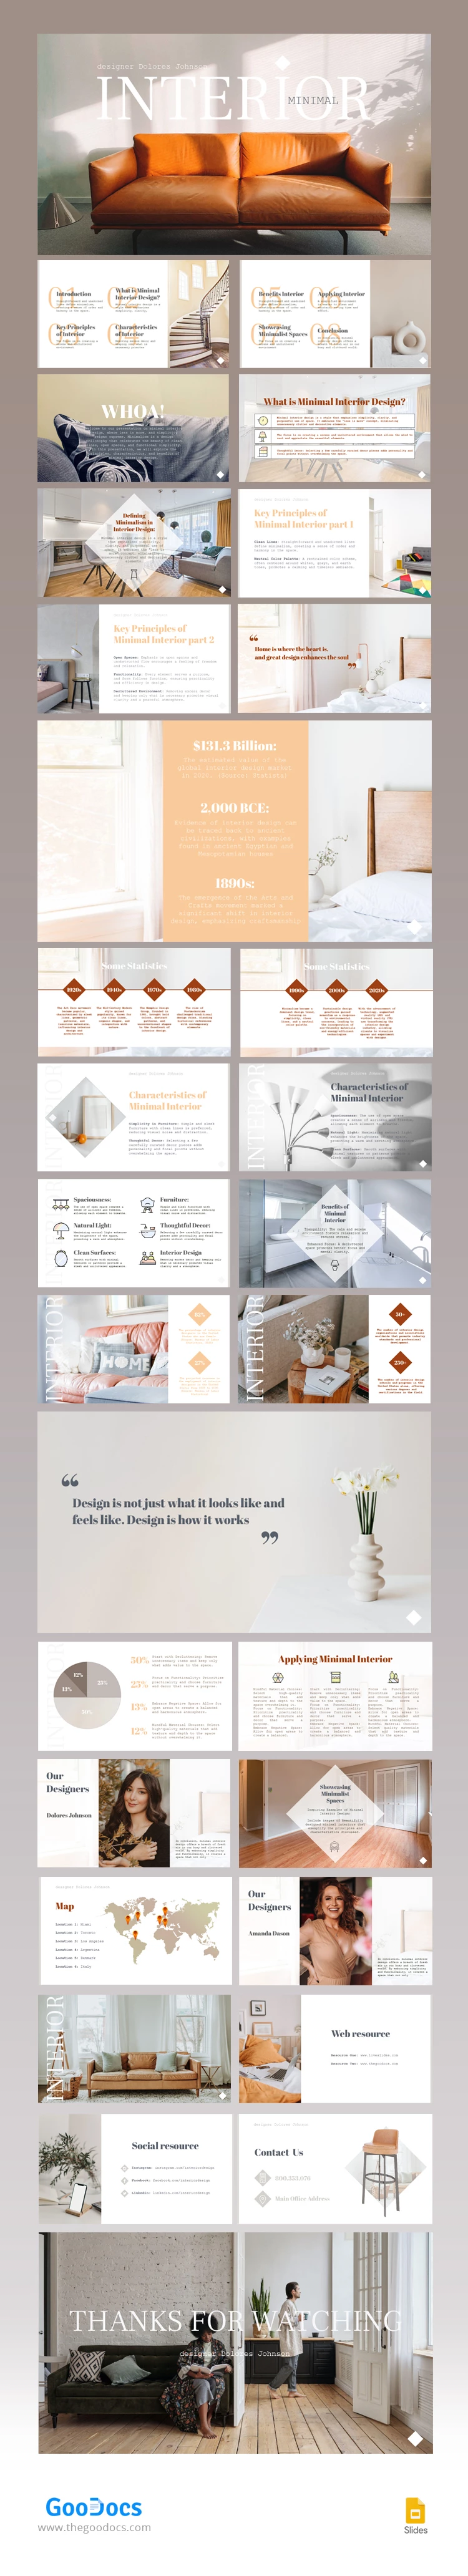 Diseño de interiores minimalista - free Google Docs Template - 10066995